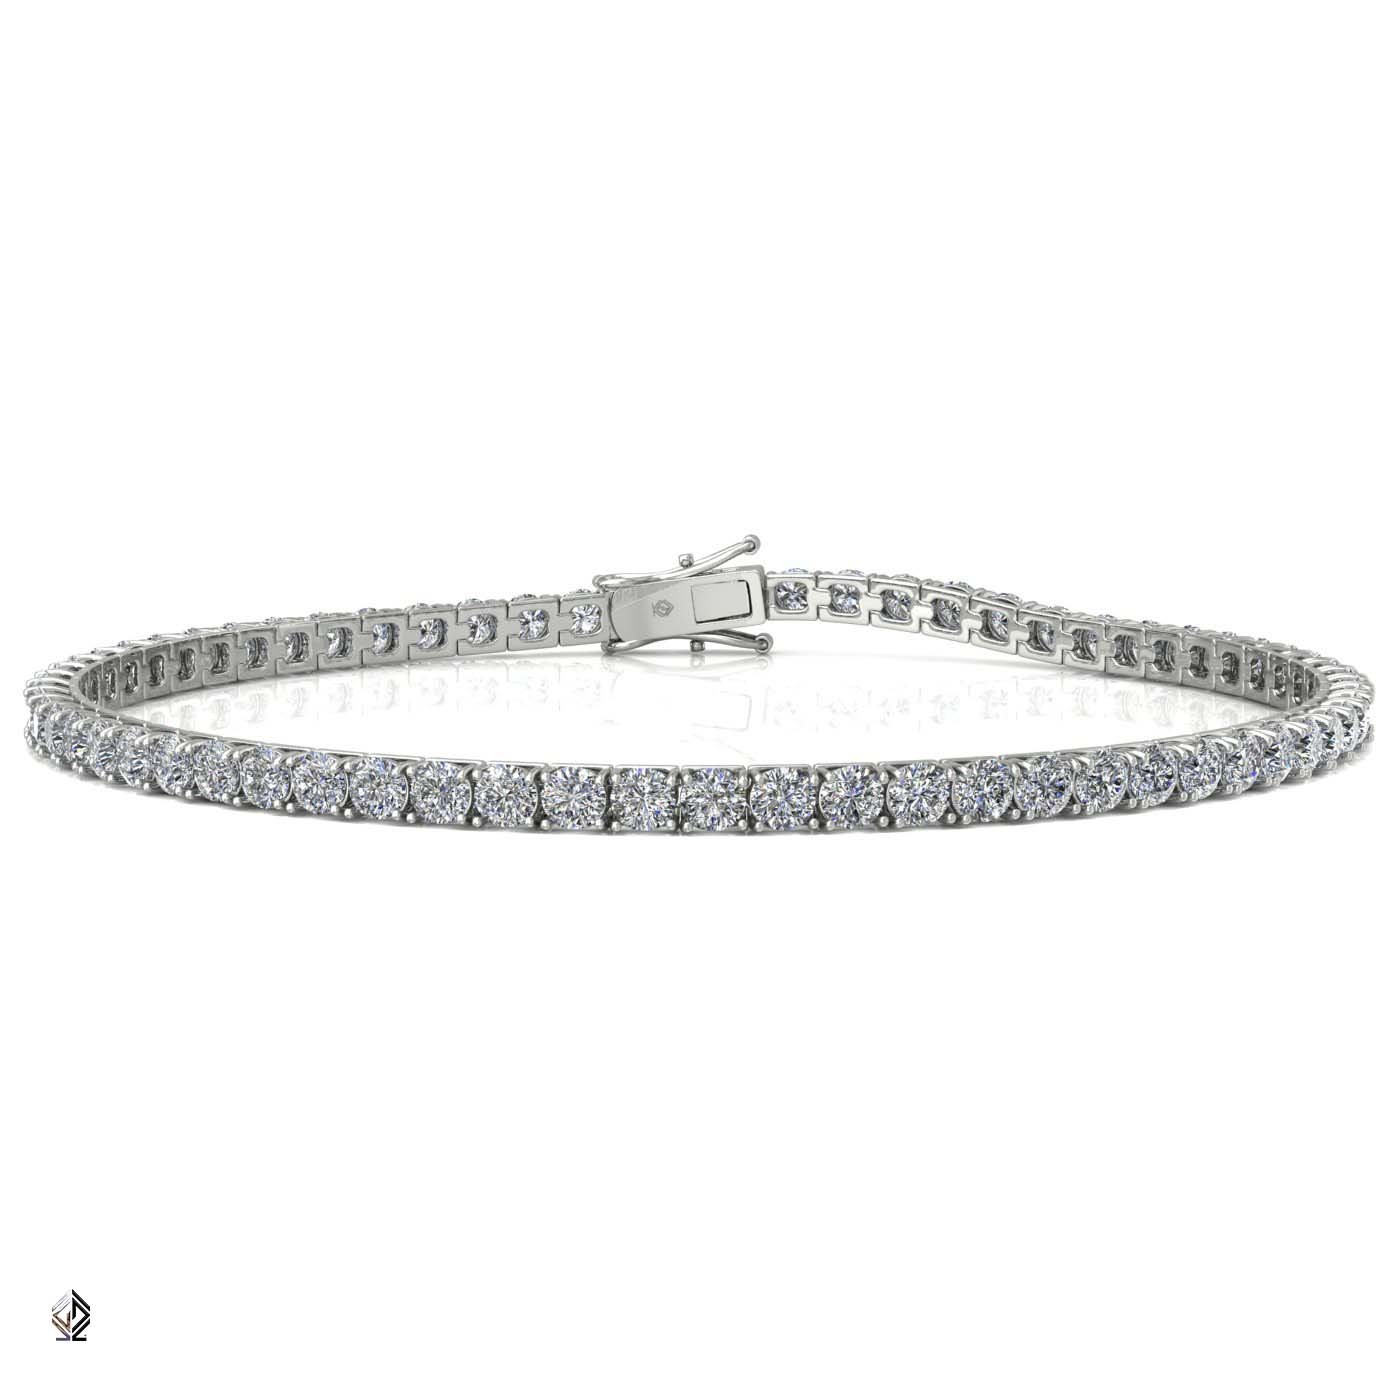 18k white gold  1.8mm 4 prong round shape diamond tennis bracelet in square setting